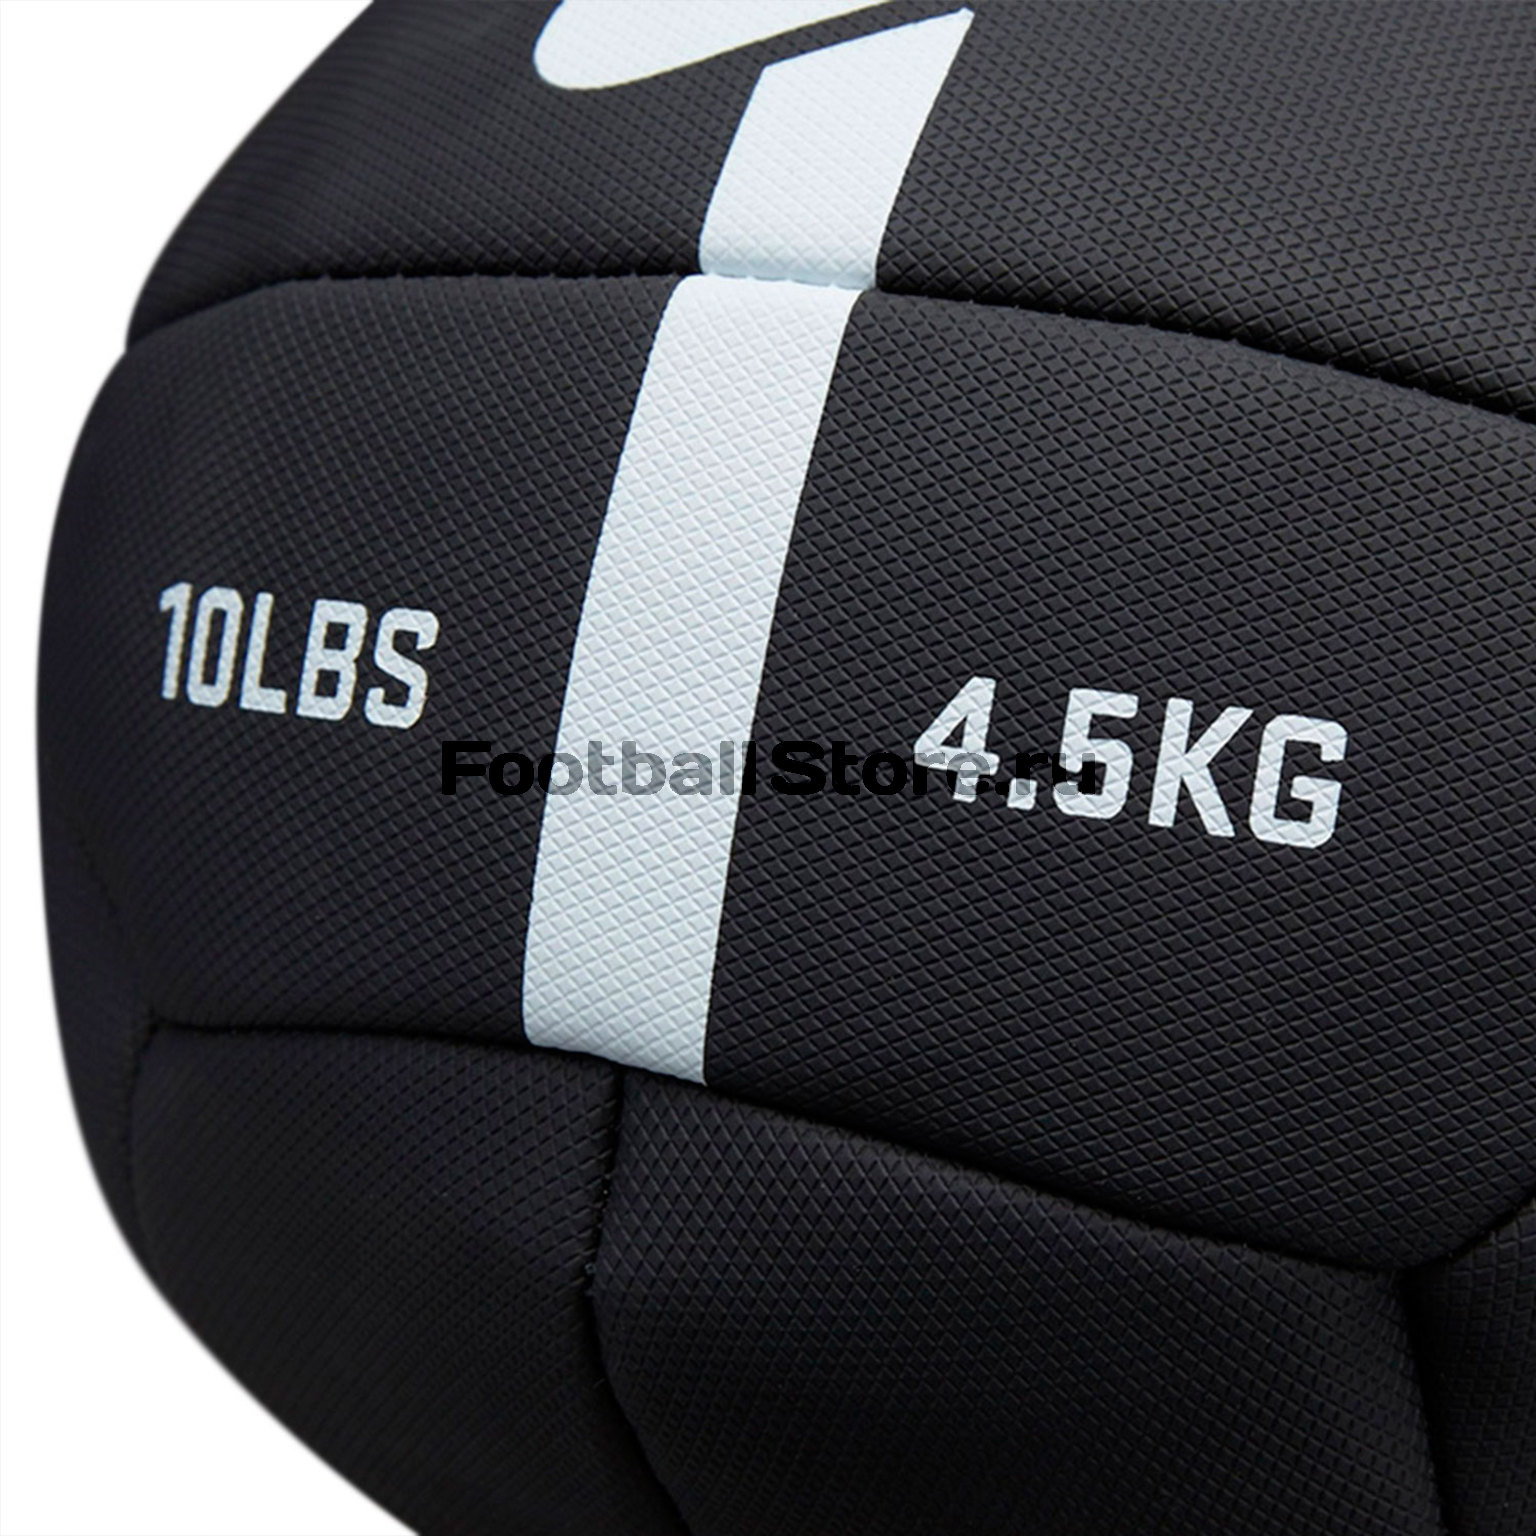 Мяч для тренировок Nike Strength Training Ball 10lb N.EW.06.010.NS